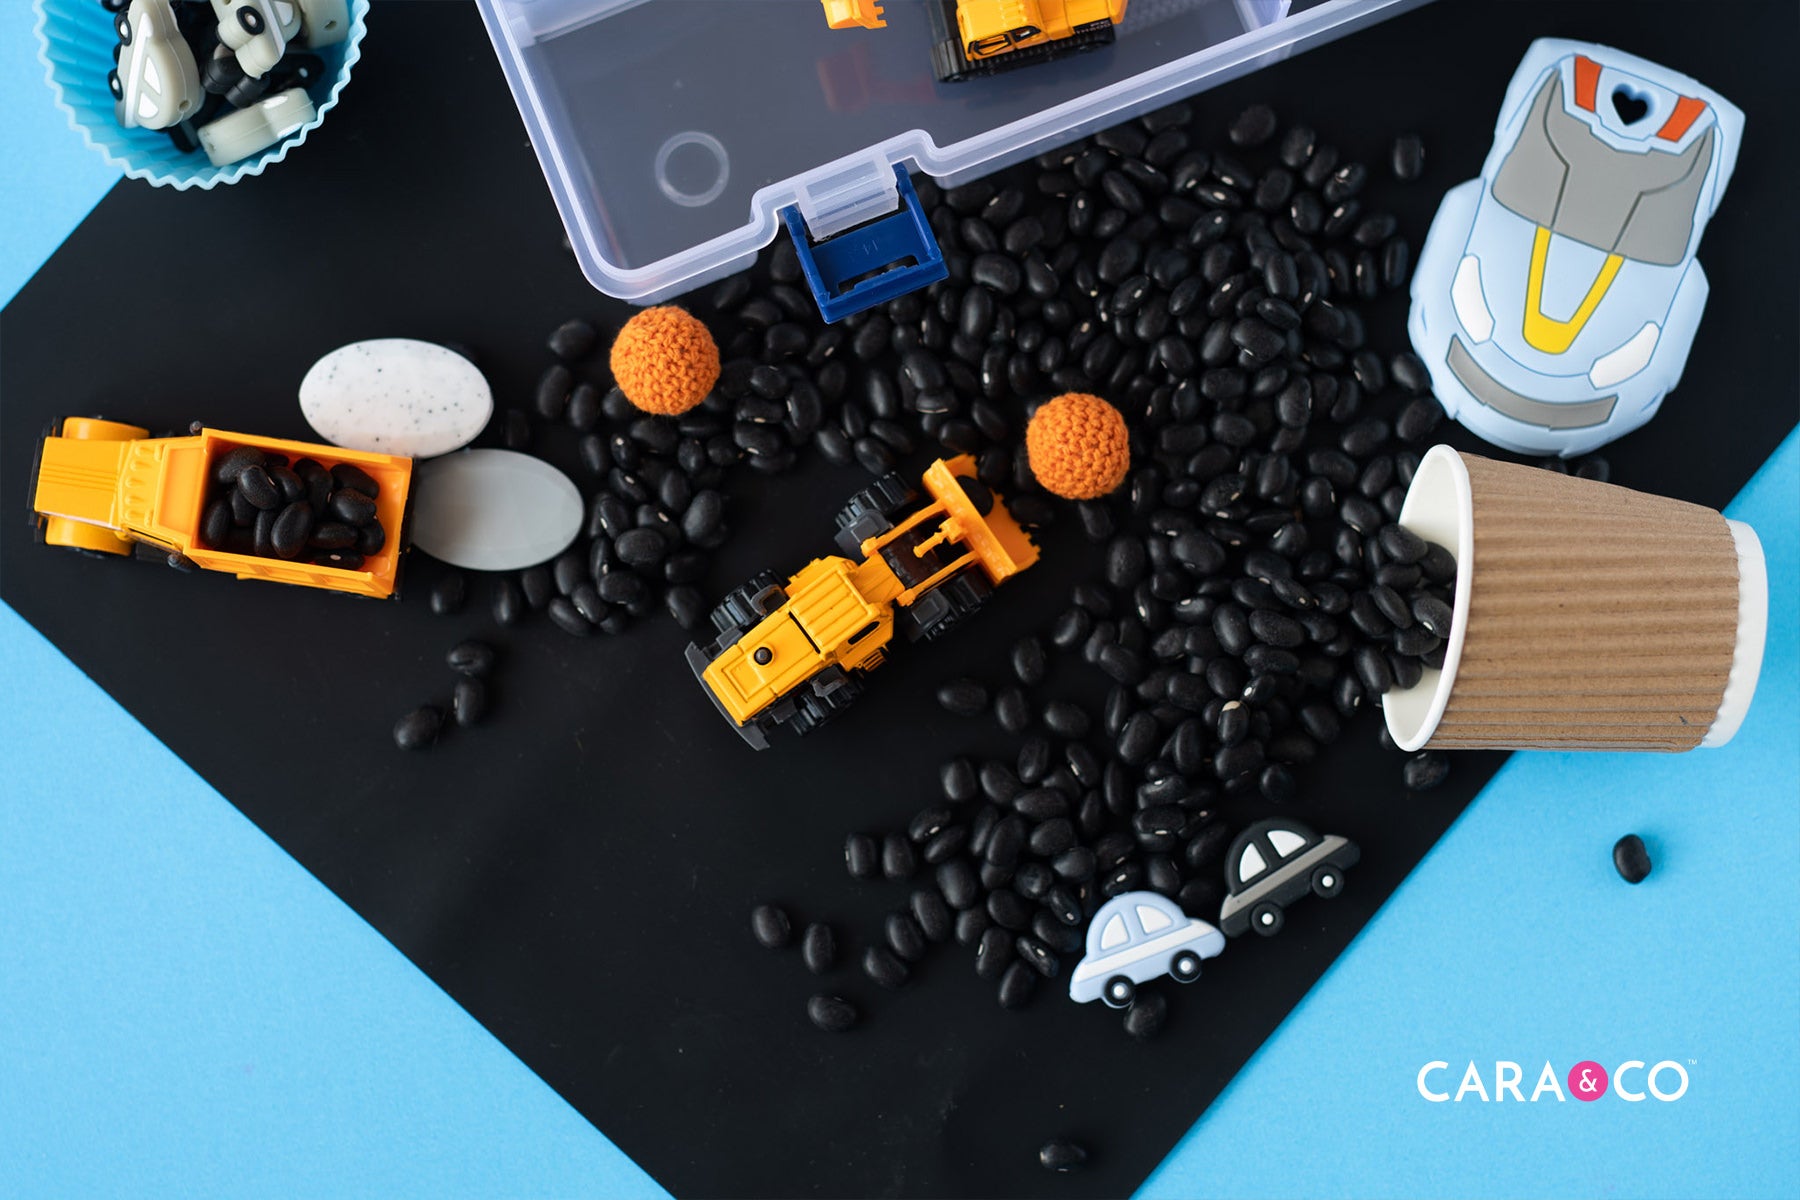 DIY Sensory bins for play based learning - Cara & Co blog posts